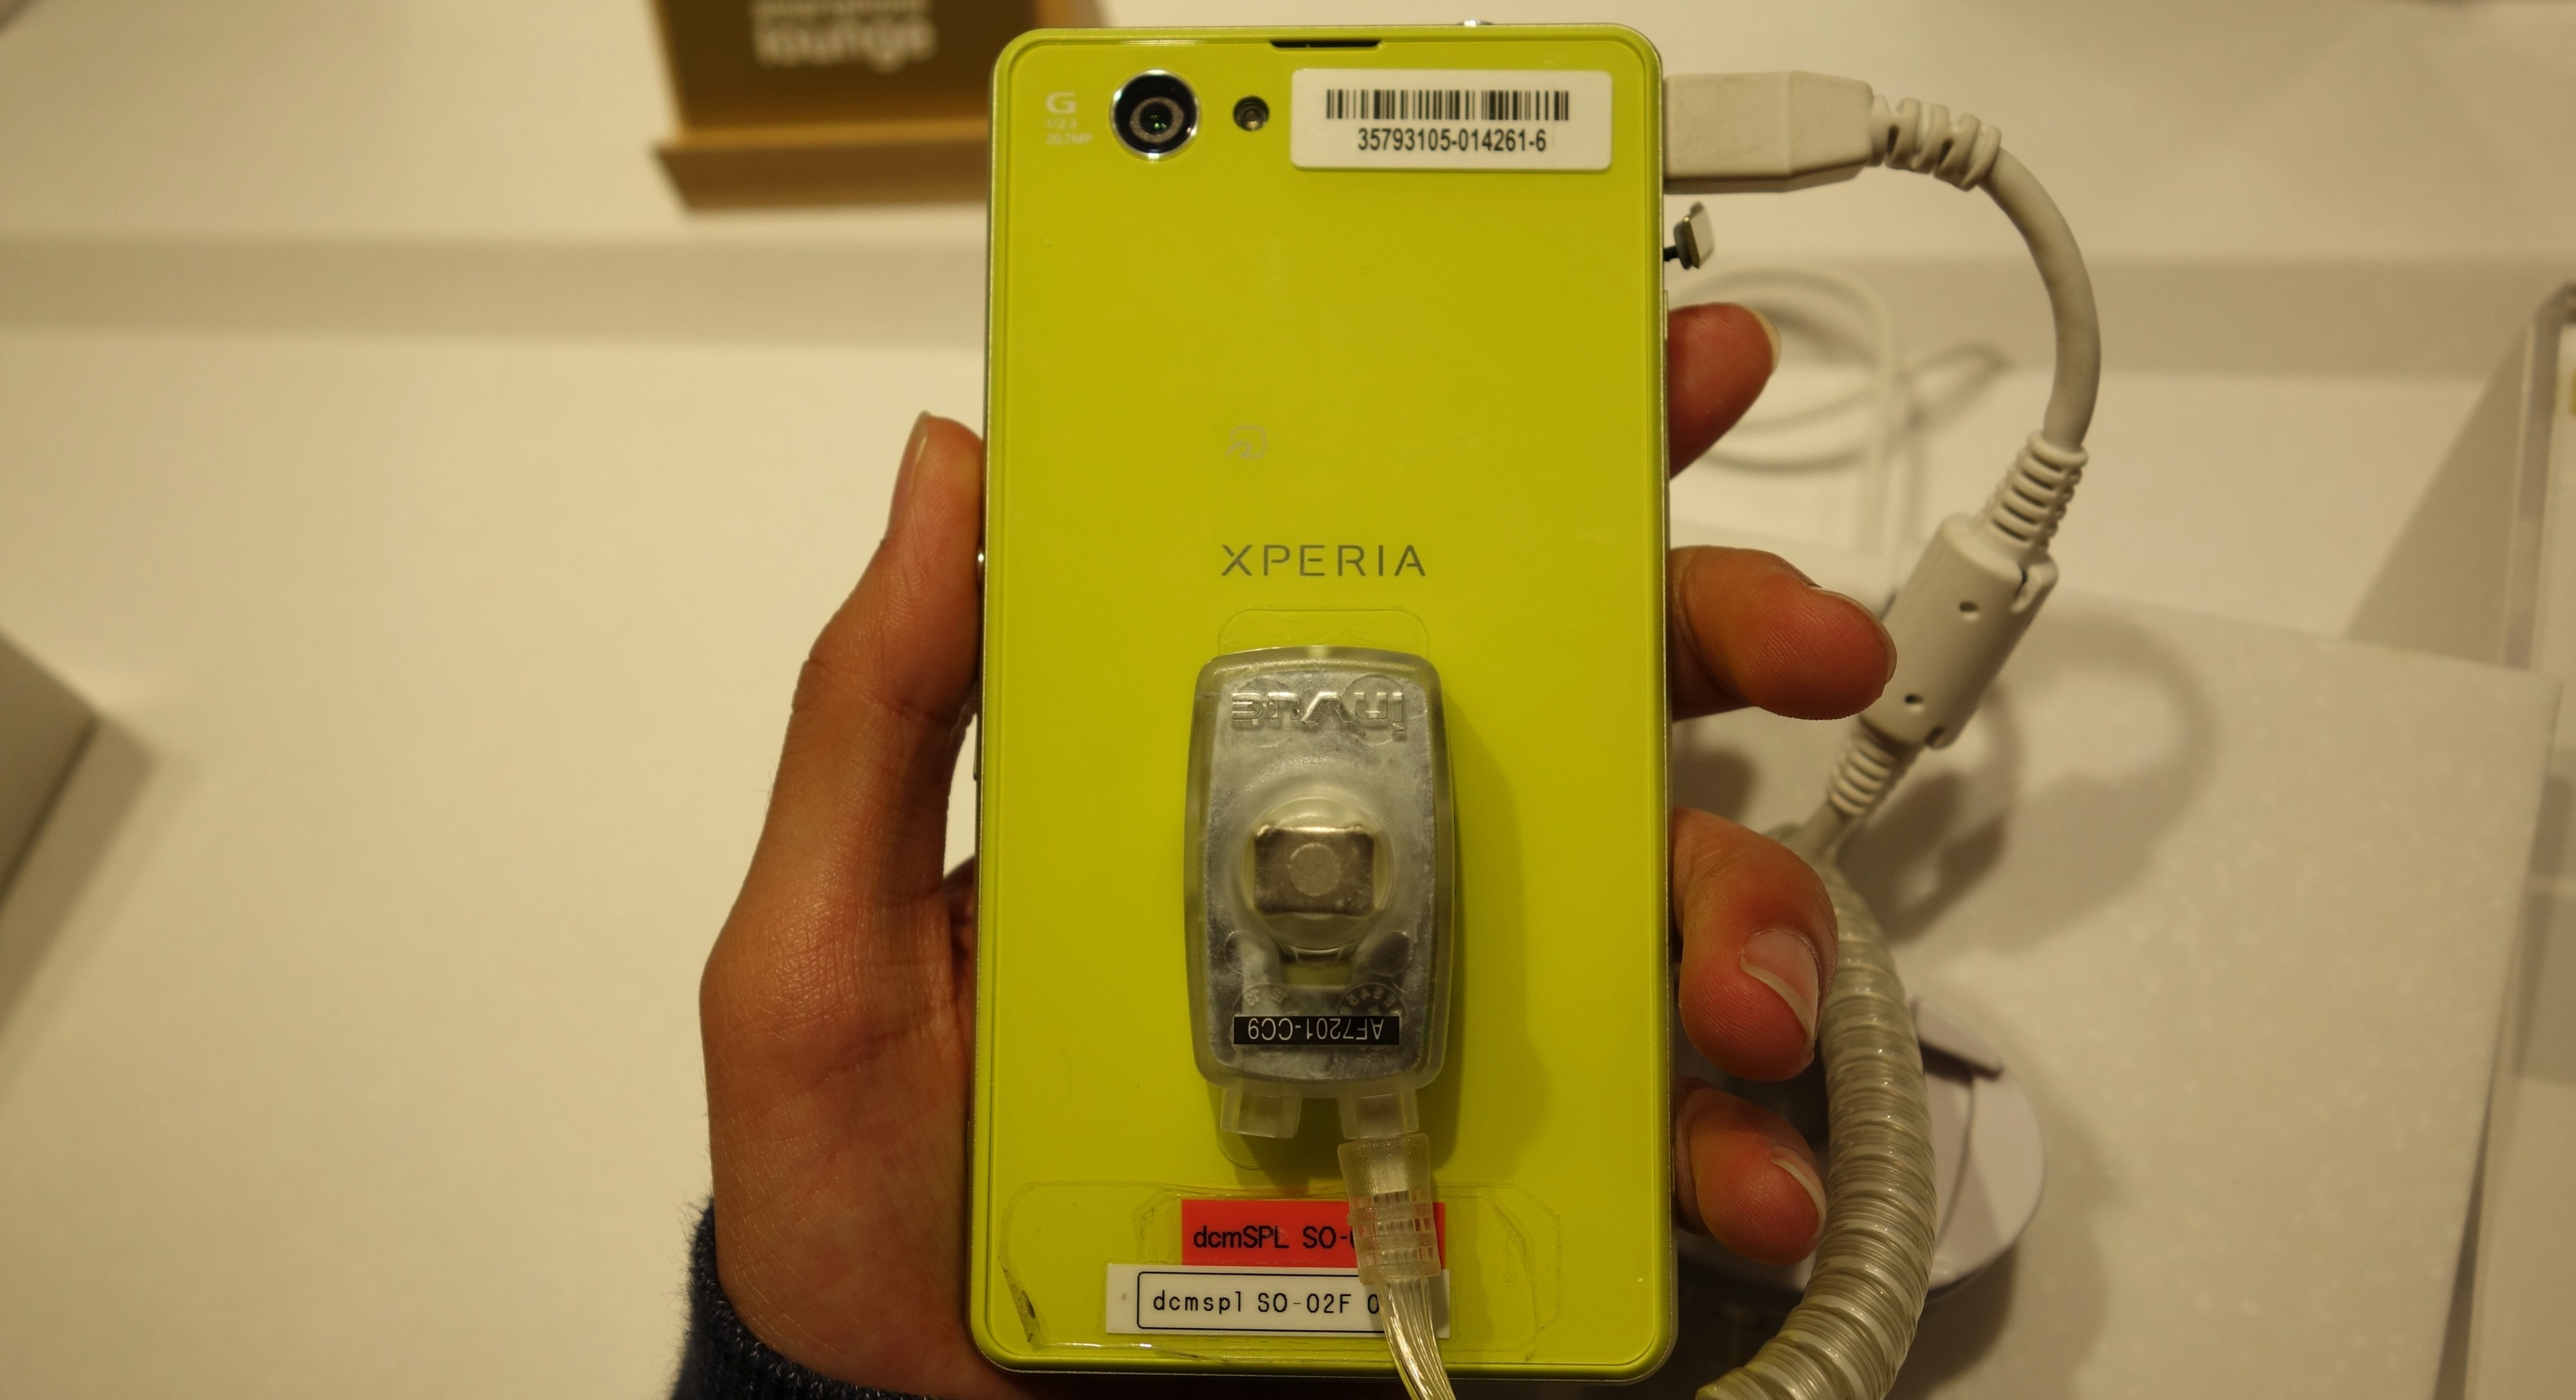 Xperia Z1 F So 02f展示機フォトレビュー ボタン位置がxperia Aから改善 ガジェットショット